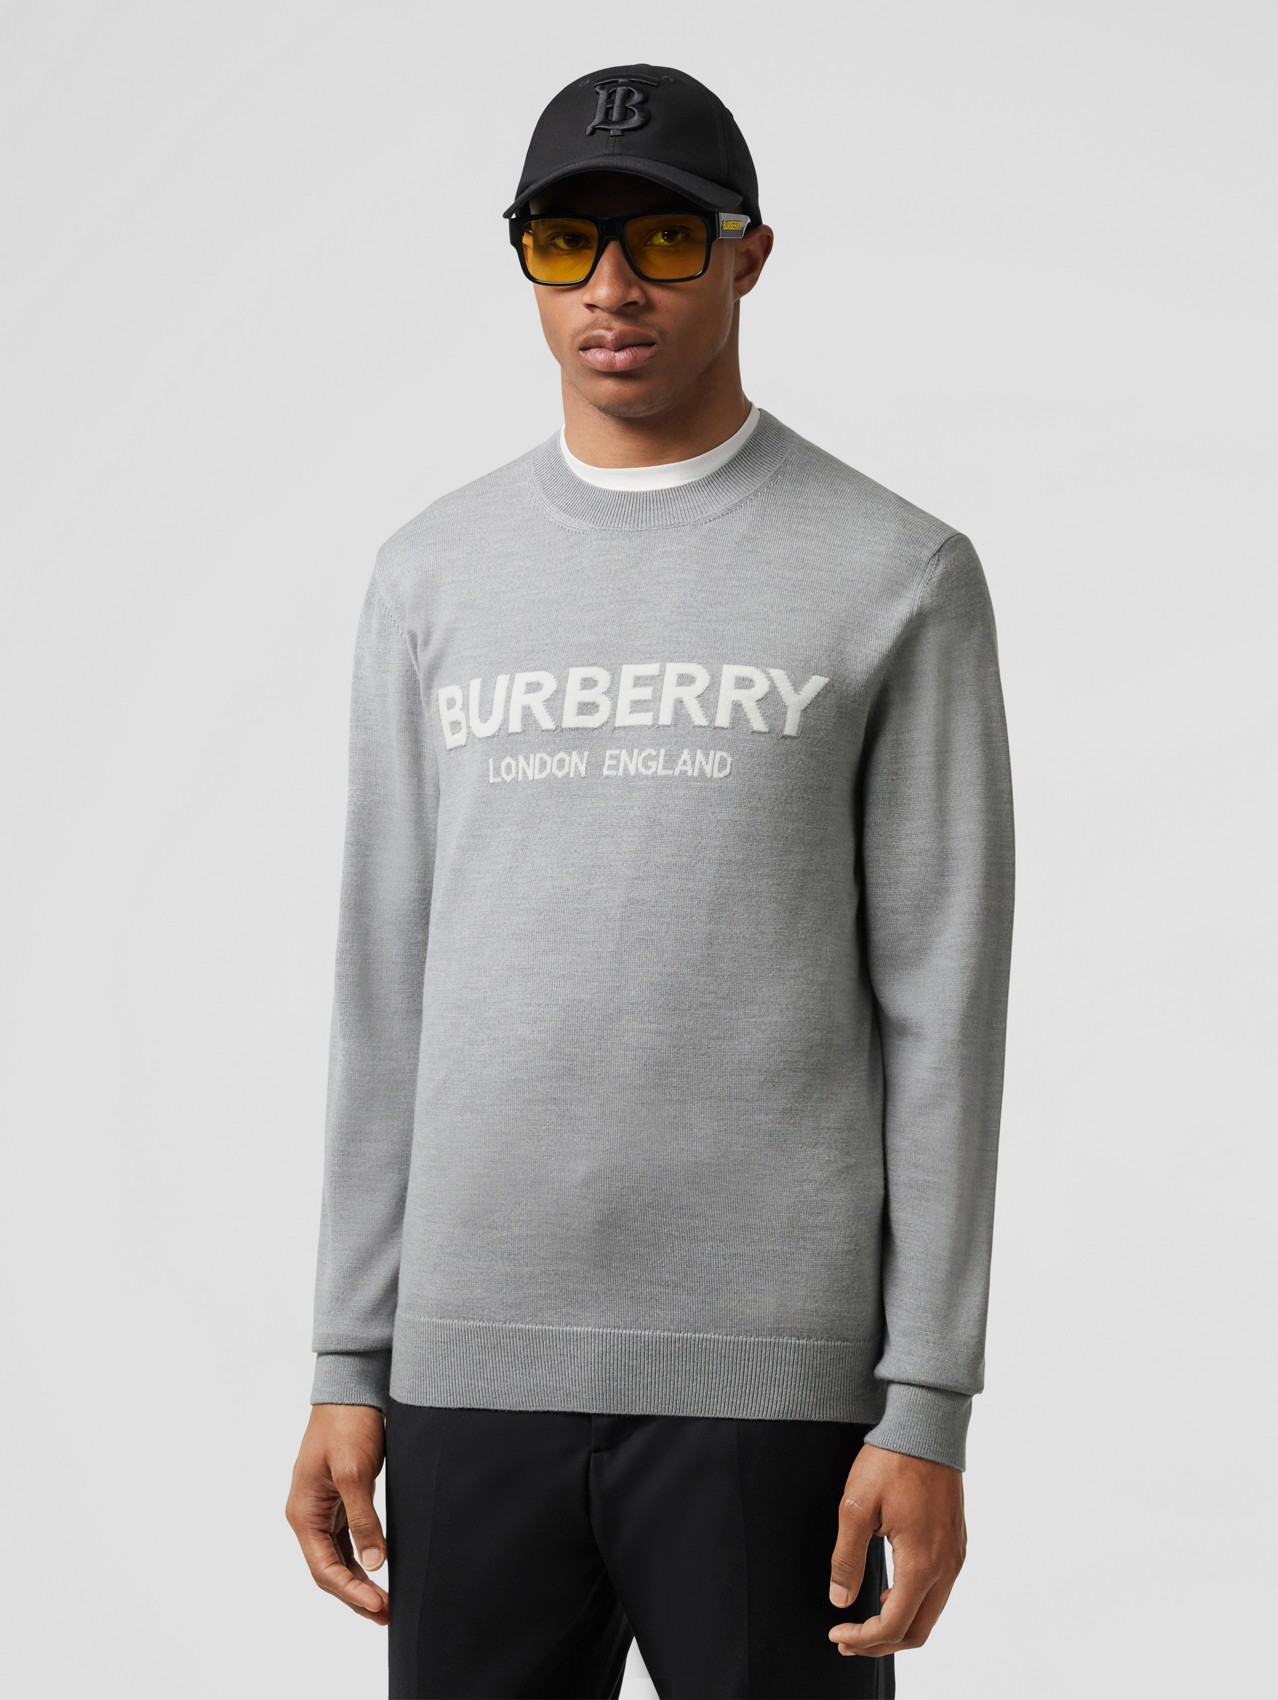 Burberry jumper Red 16Y discount 67% KIDS FASHION Jumpers & Sweatshirts Elegant 